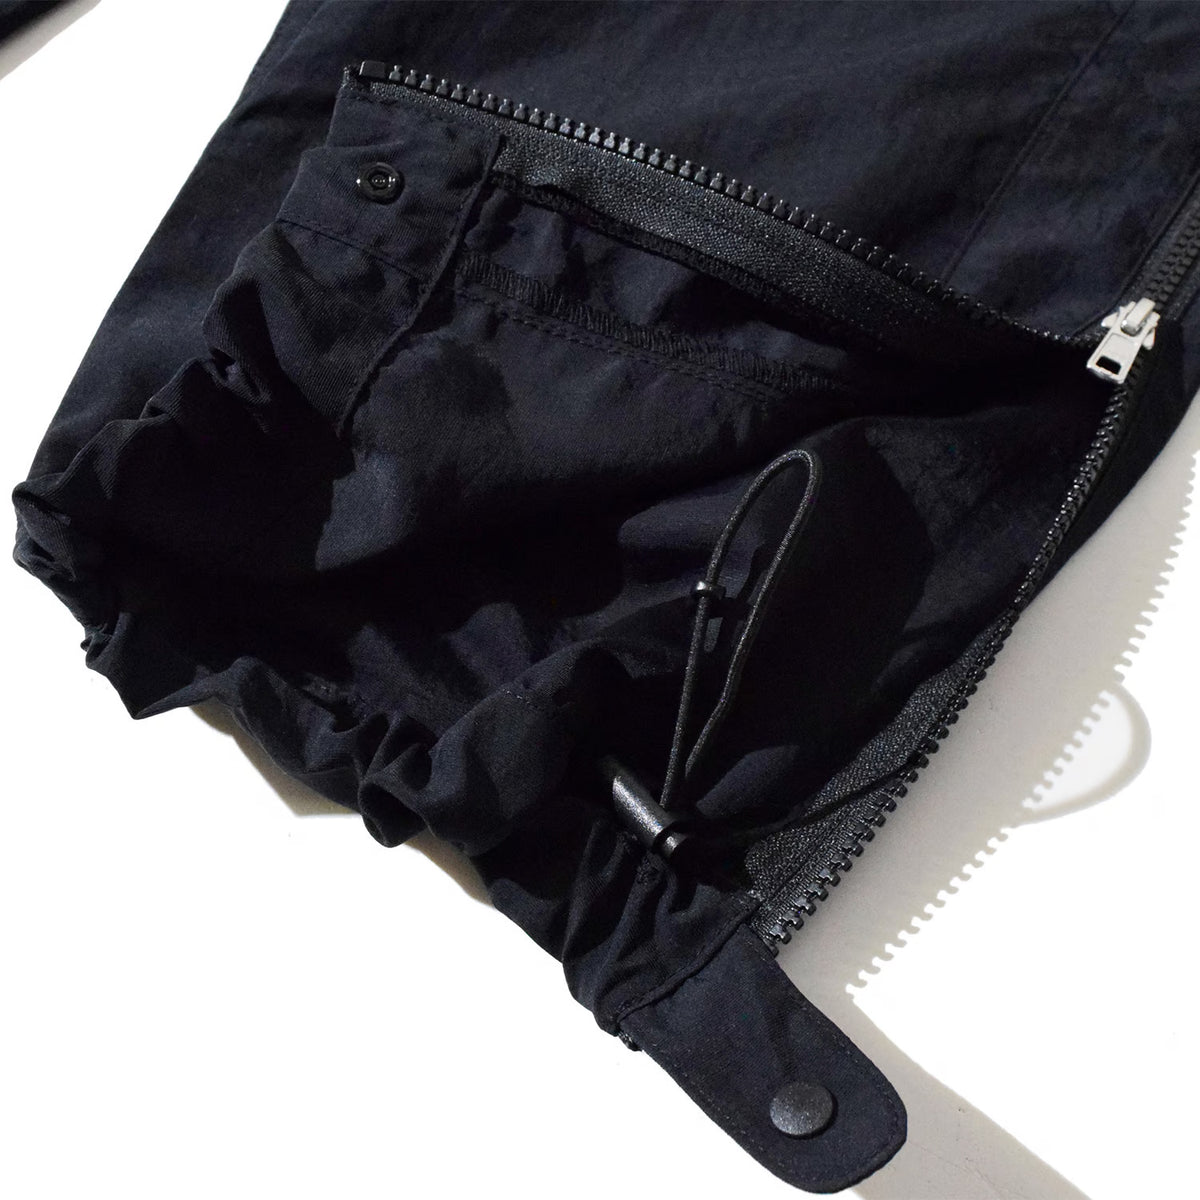 Fully Open Pants(Black)